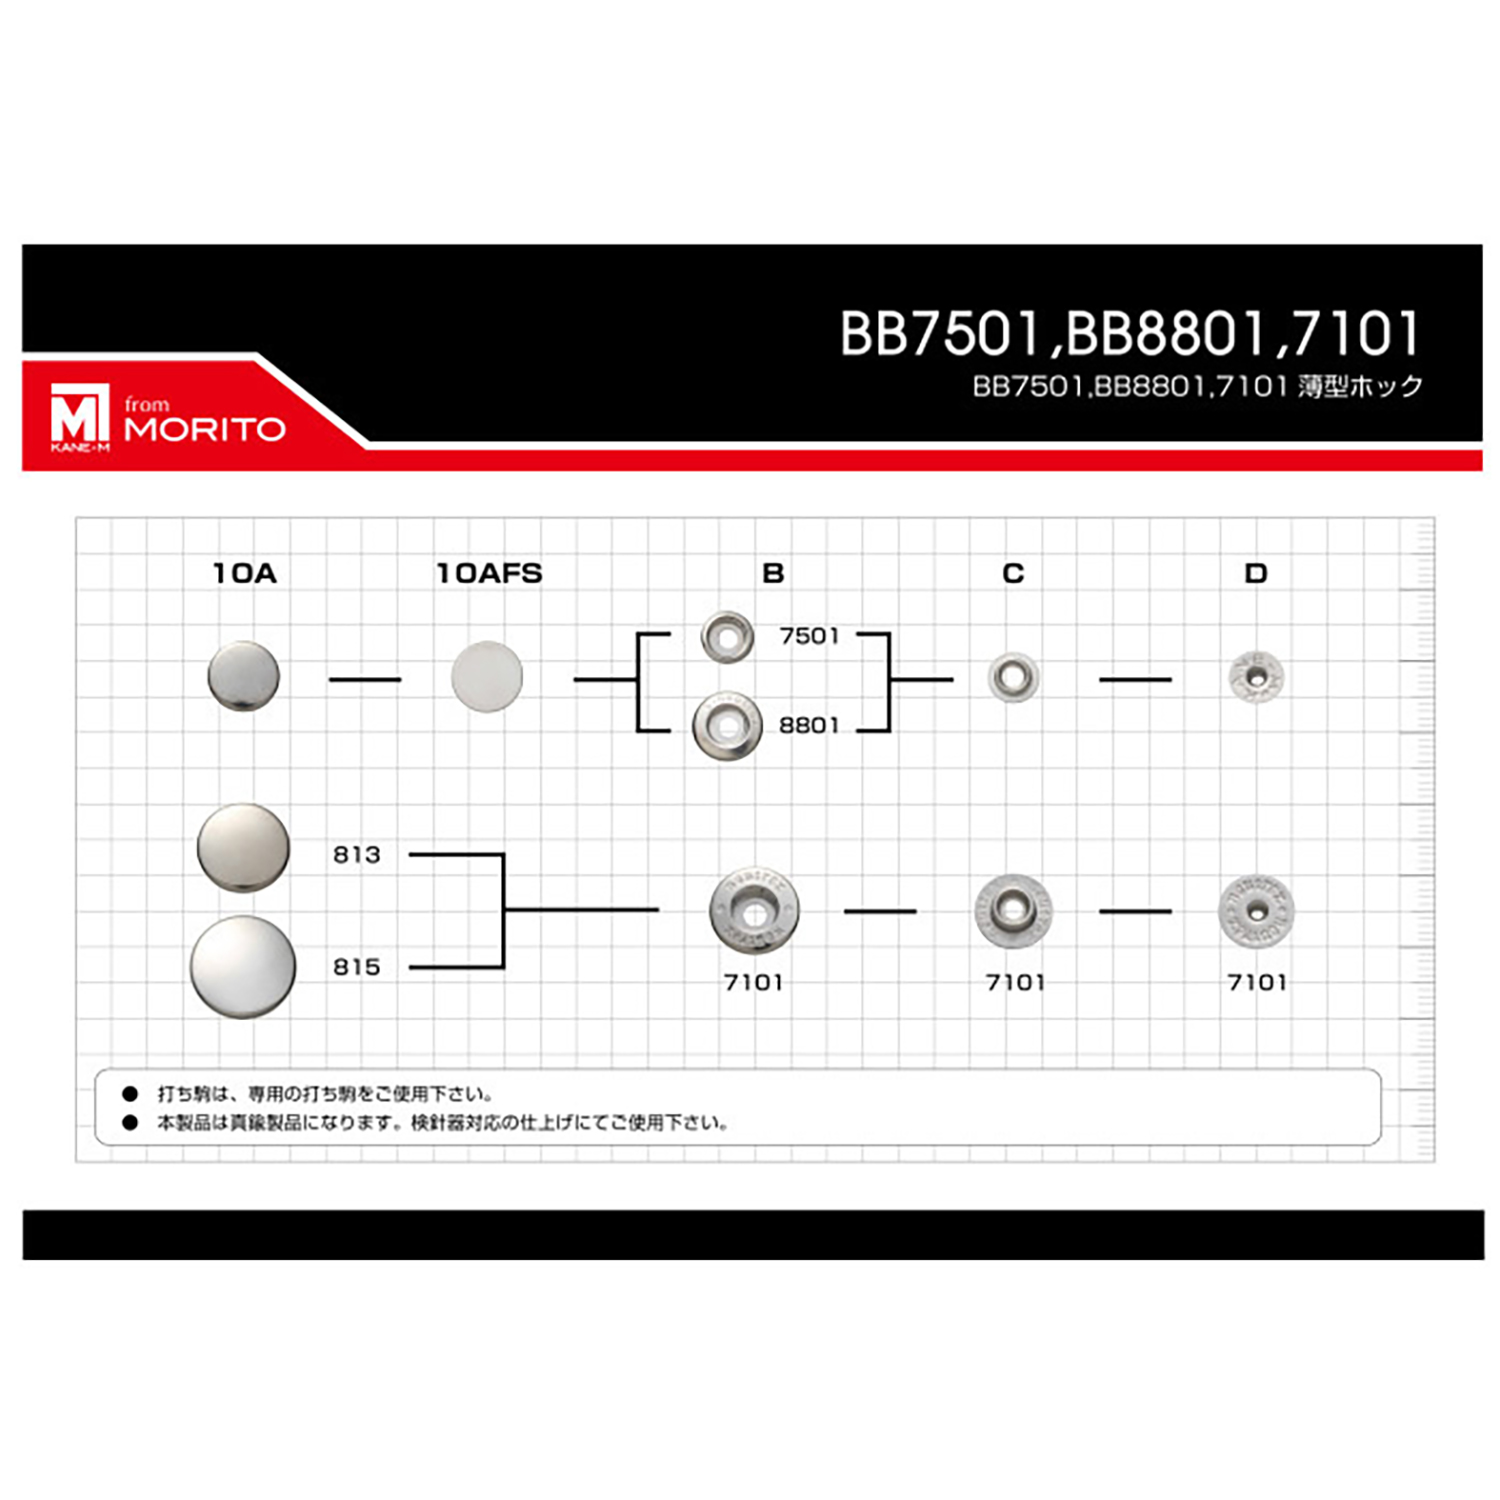 8801 8801B/C/D Under Parts (Socket/Stud/Post SET)[Press Fastener/ Eyelet Washer] Morito